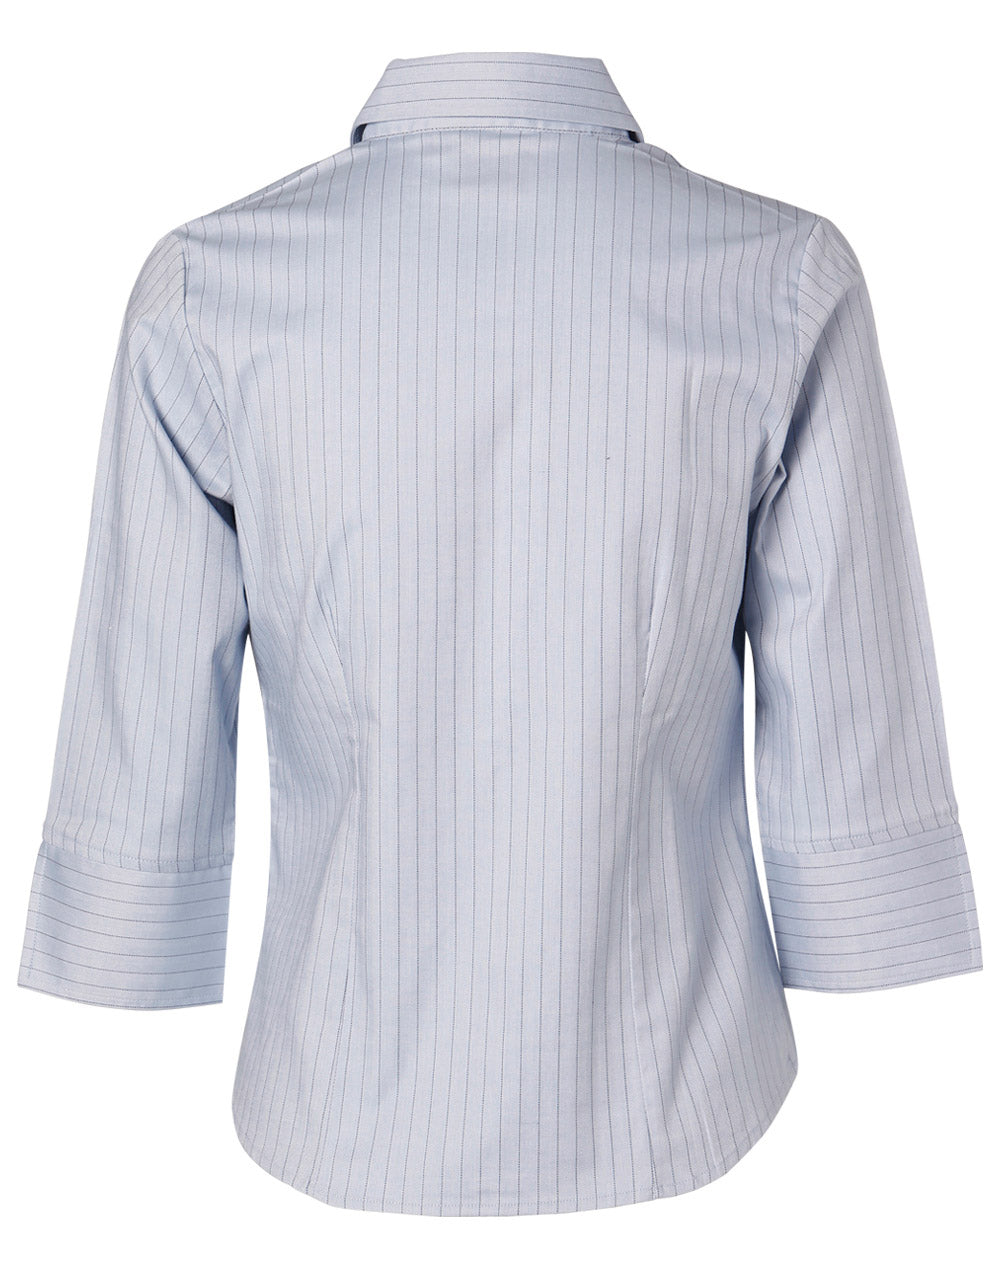 Winning Spirit Women's Pin Stripe 3/4 Sleeve Shirt (BS18)